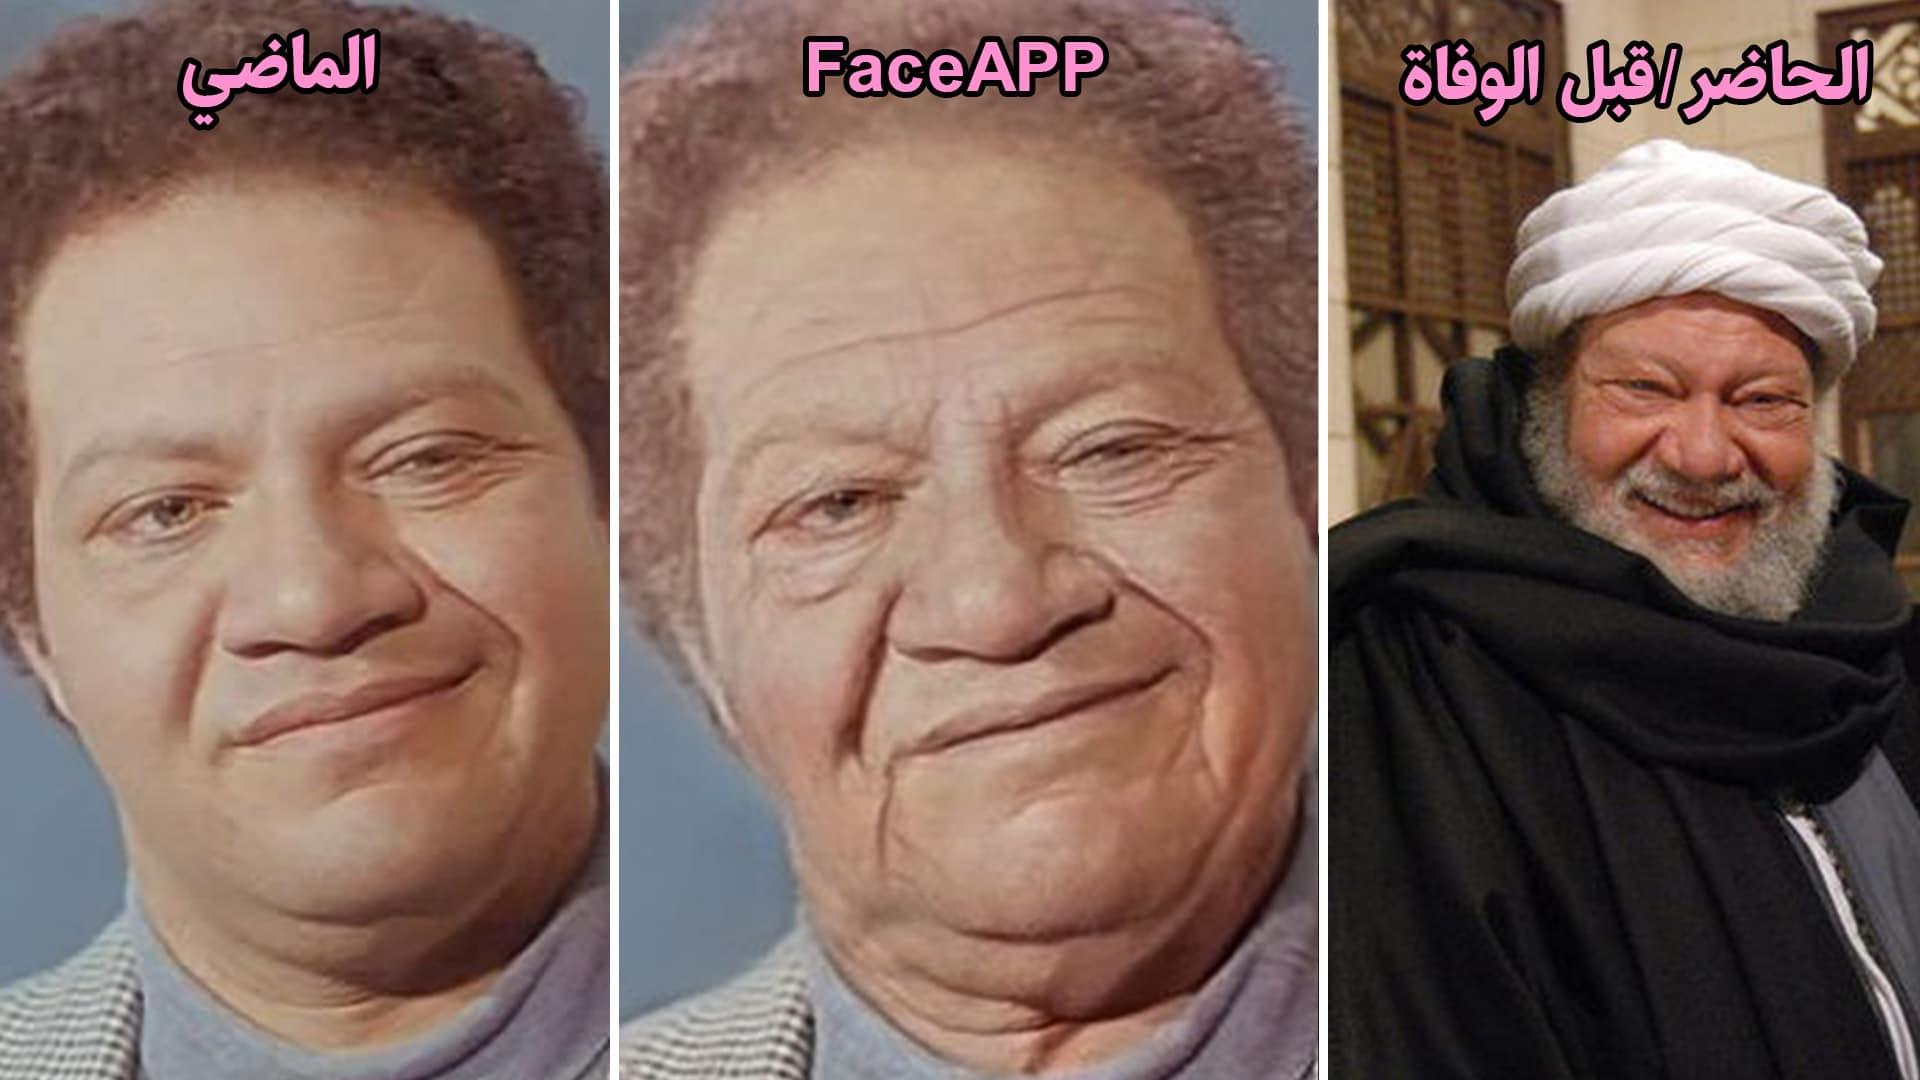 يحيي الفخراني - face app